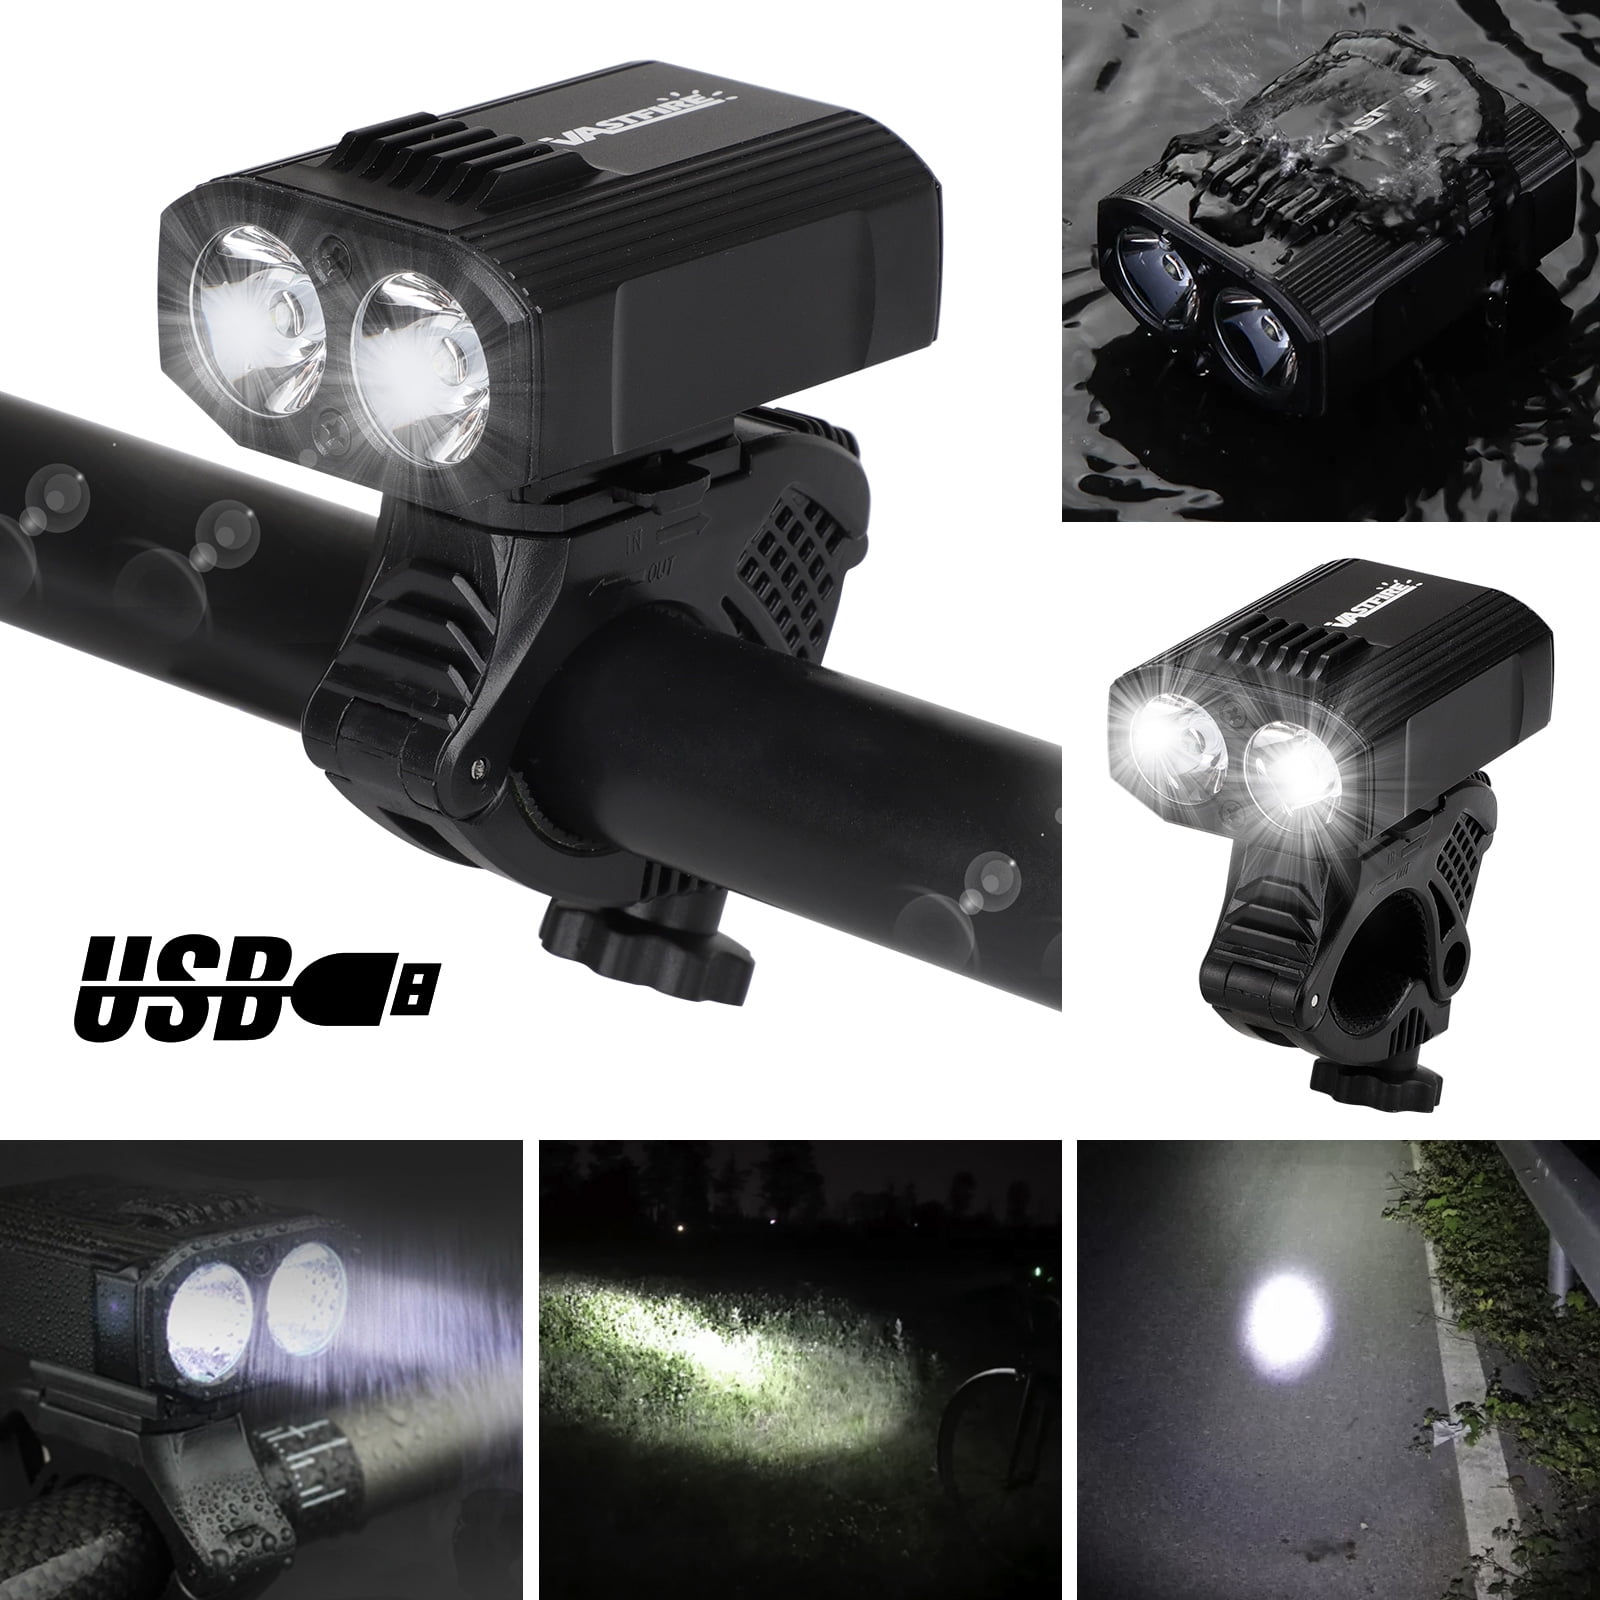 Waterproof USB Rechargeable 500 Lumen LED Bike Light Headlight Taillight Set 